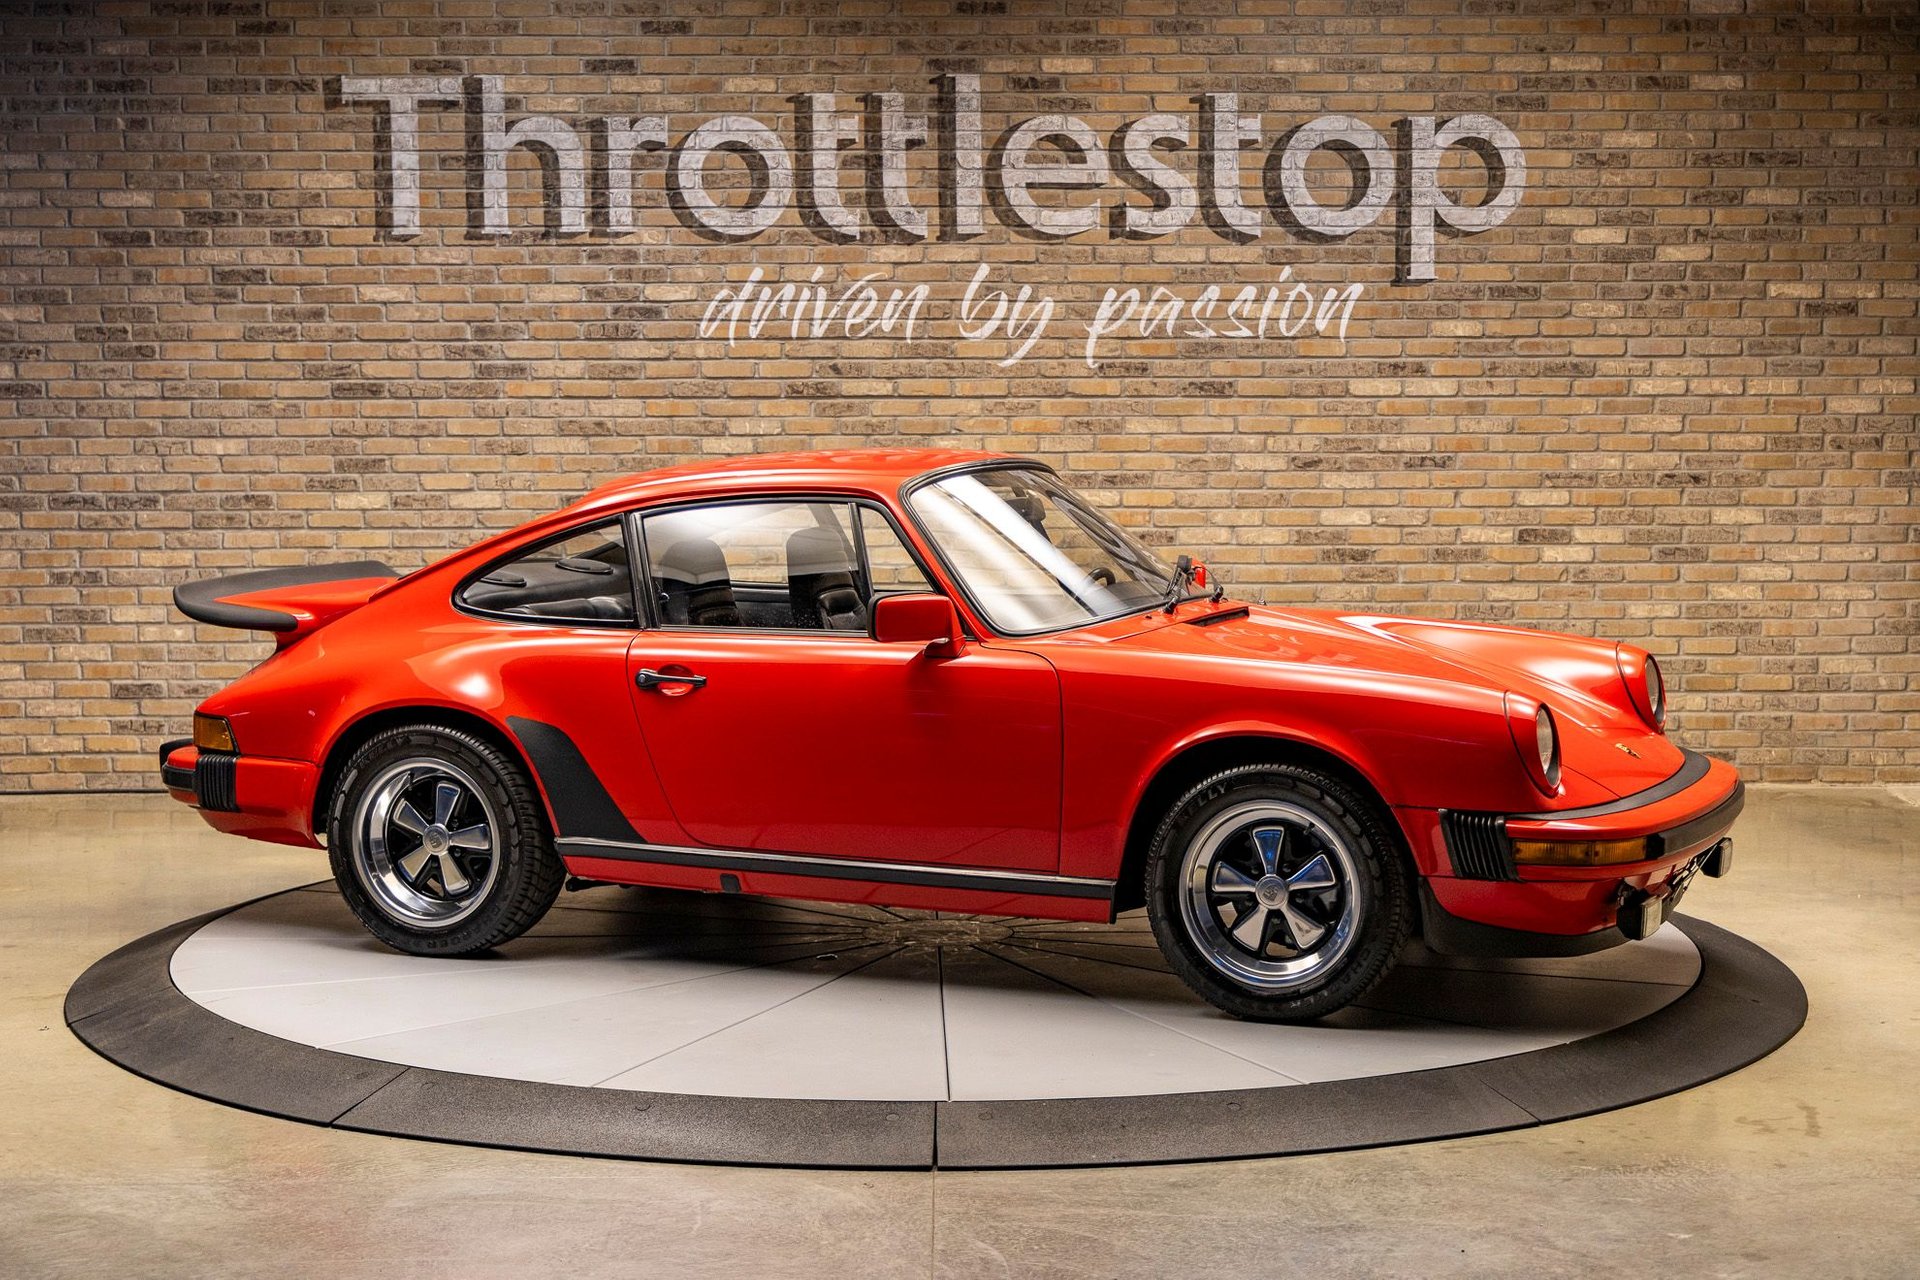 813485 | 1978 Porsche 911 SC | Throttlestop | Automotive and Motorcycle Consignment Dealer